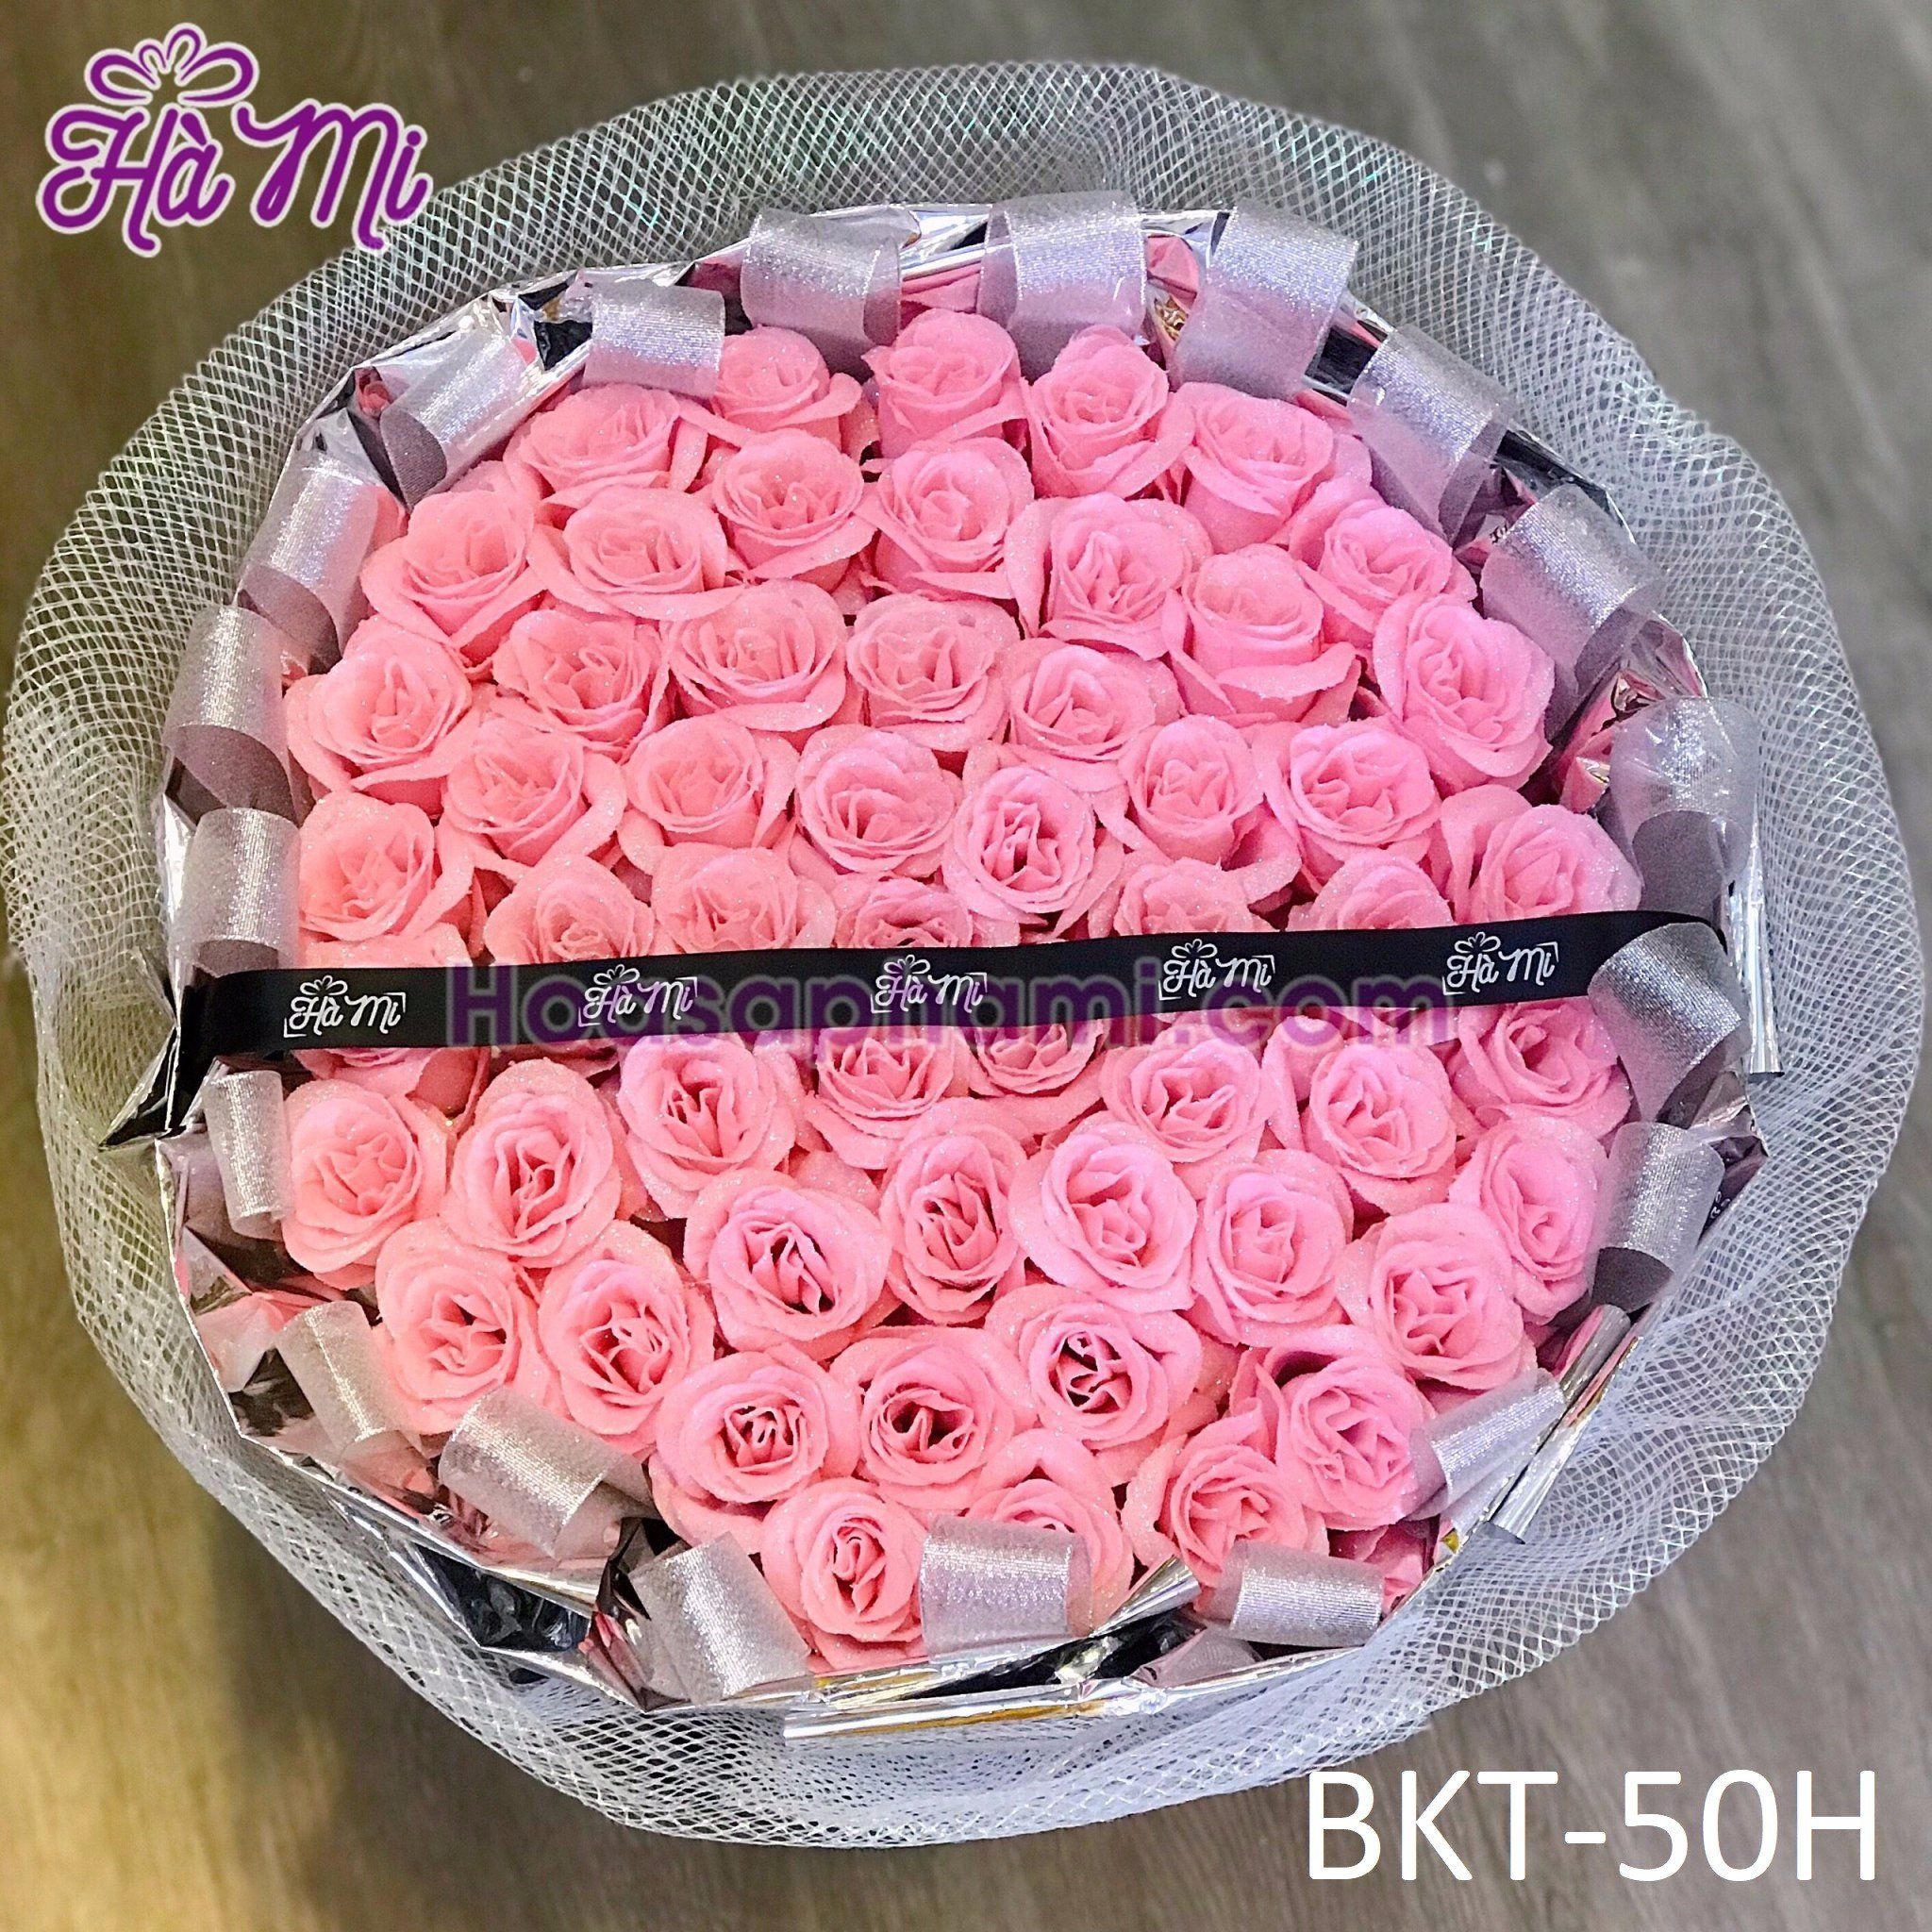 Hà Mi BKT-50H